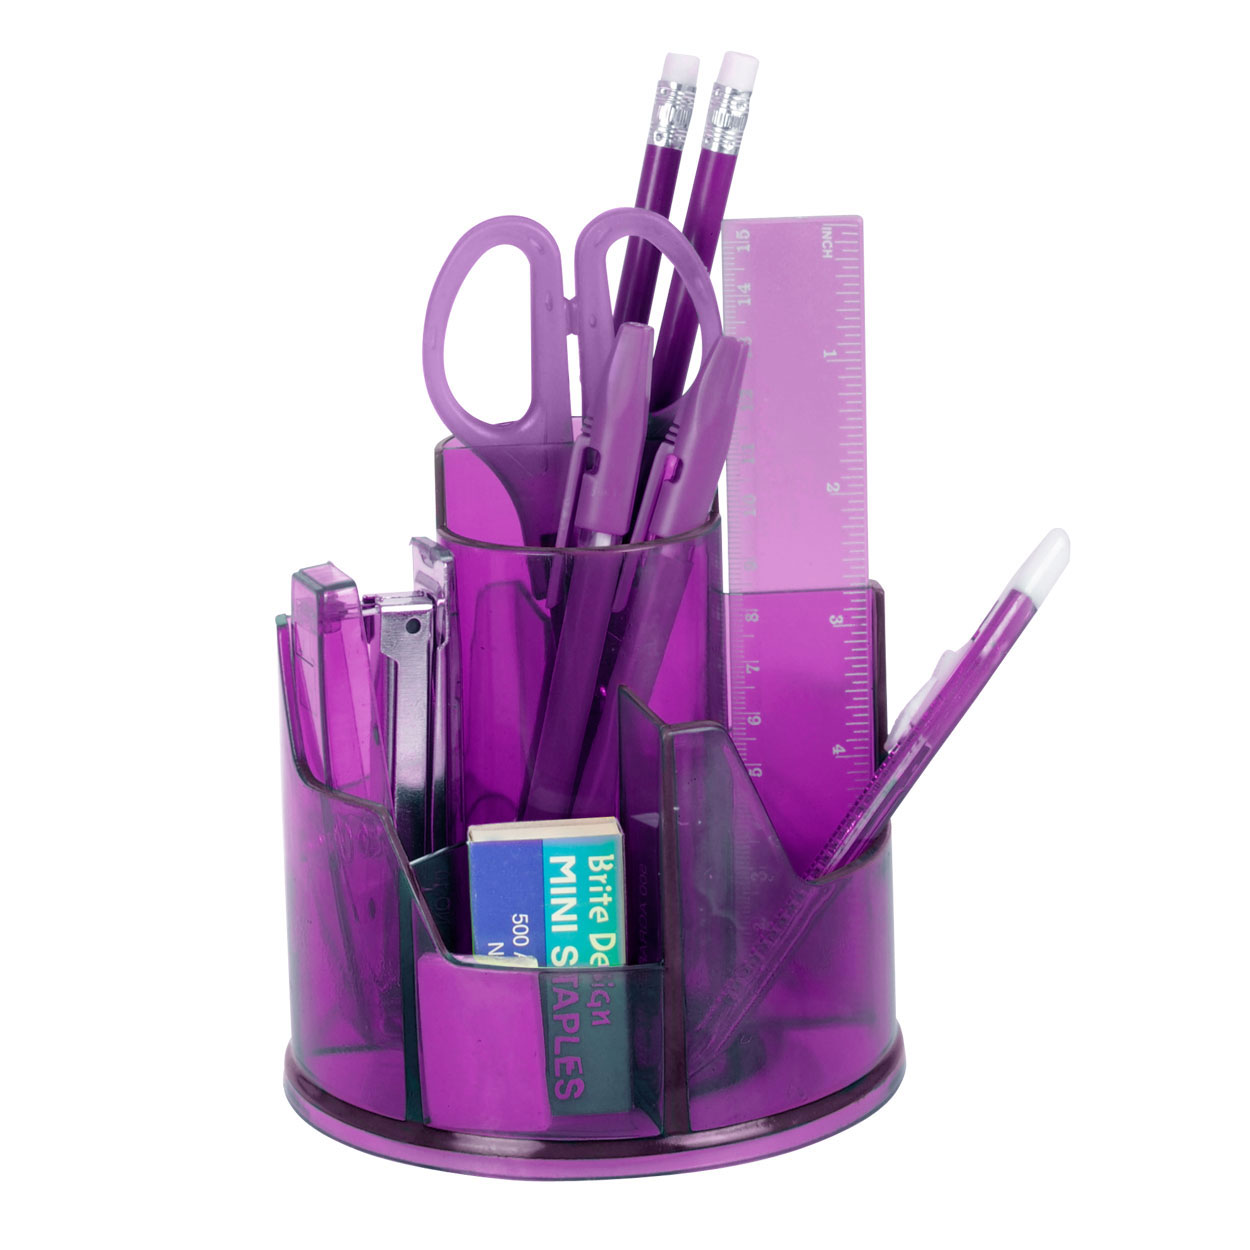 Purple Desk Set